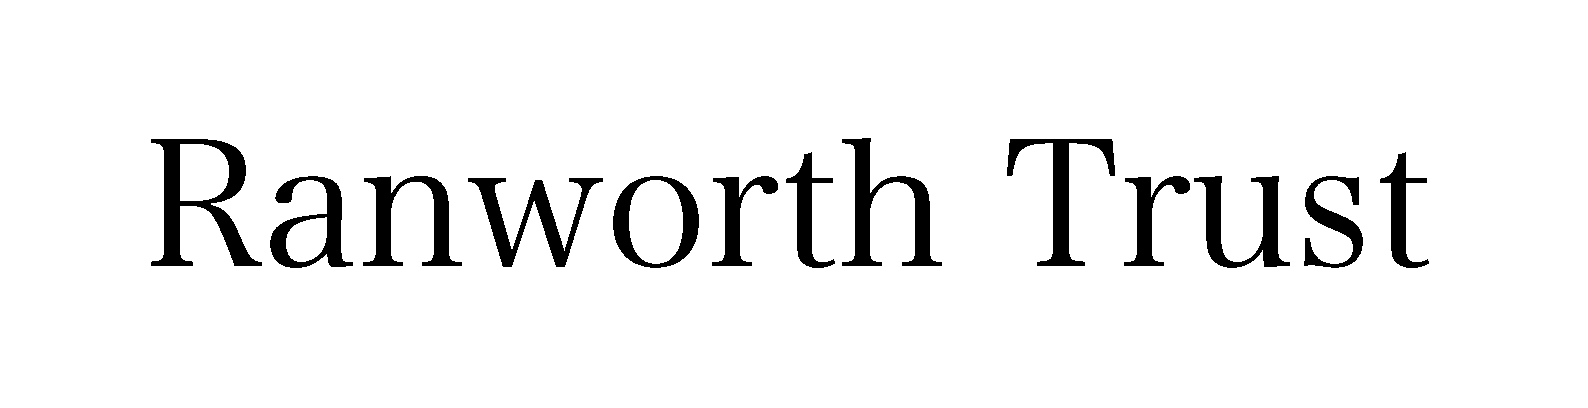 Ranworth trust logo